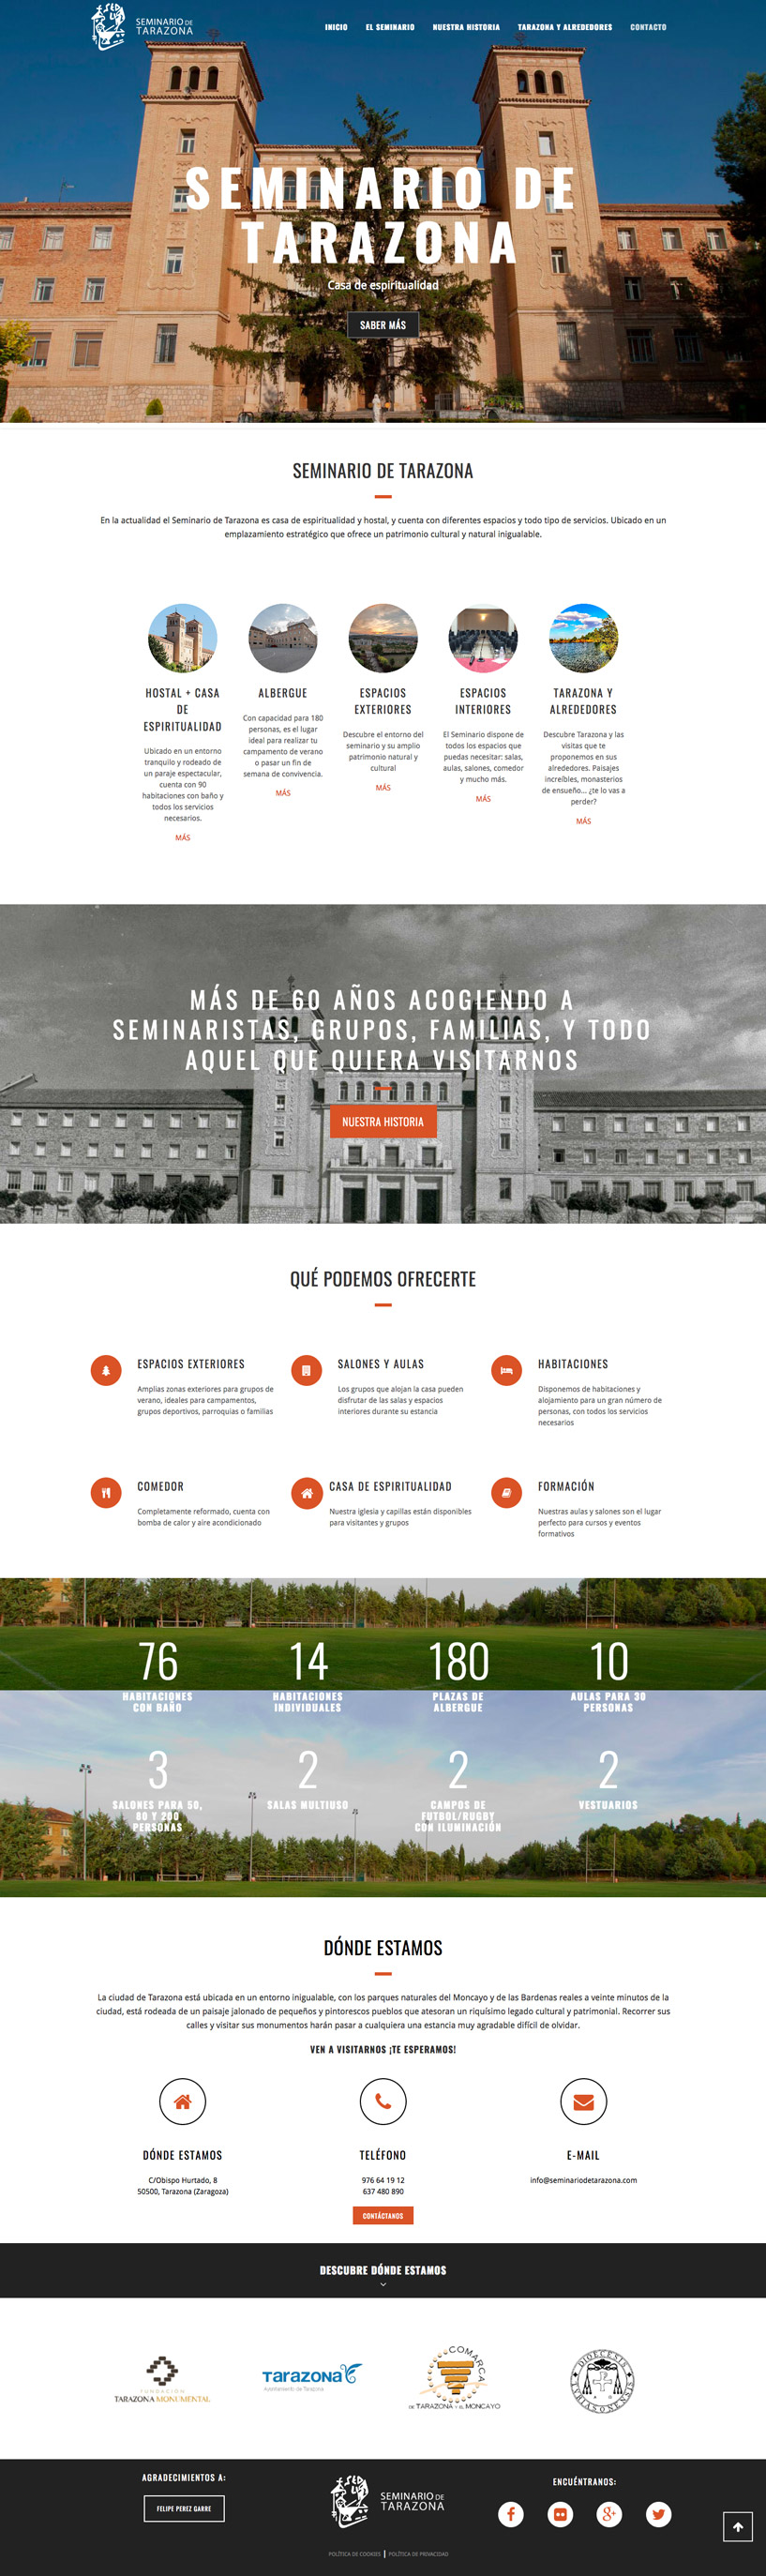 Diseño página web zaragoza seminario de tarazona seminariodetarazona.com